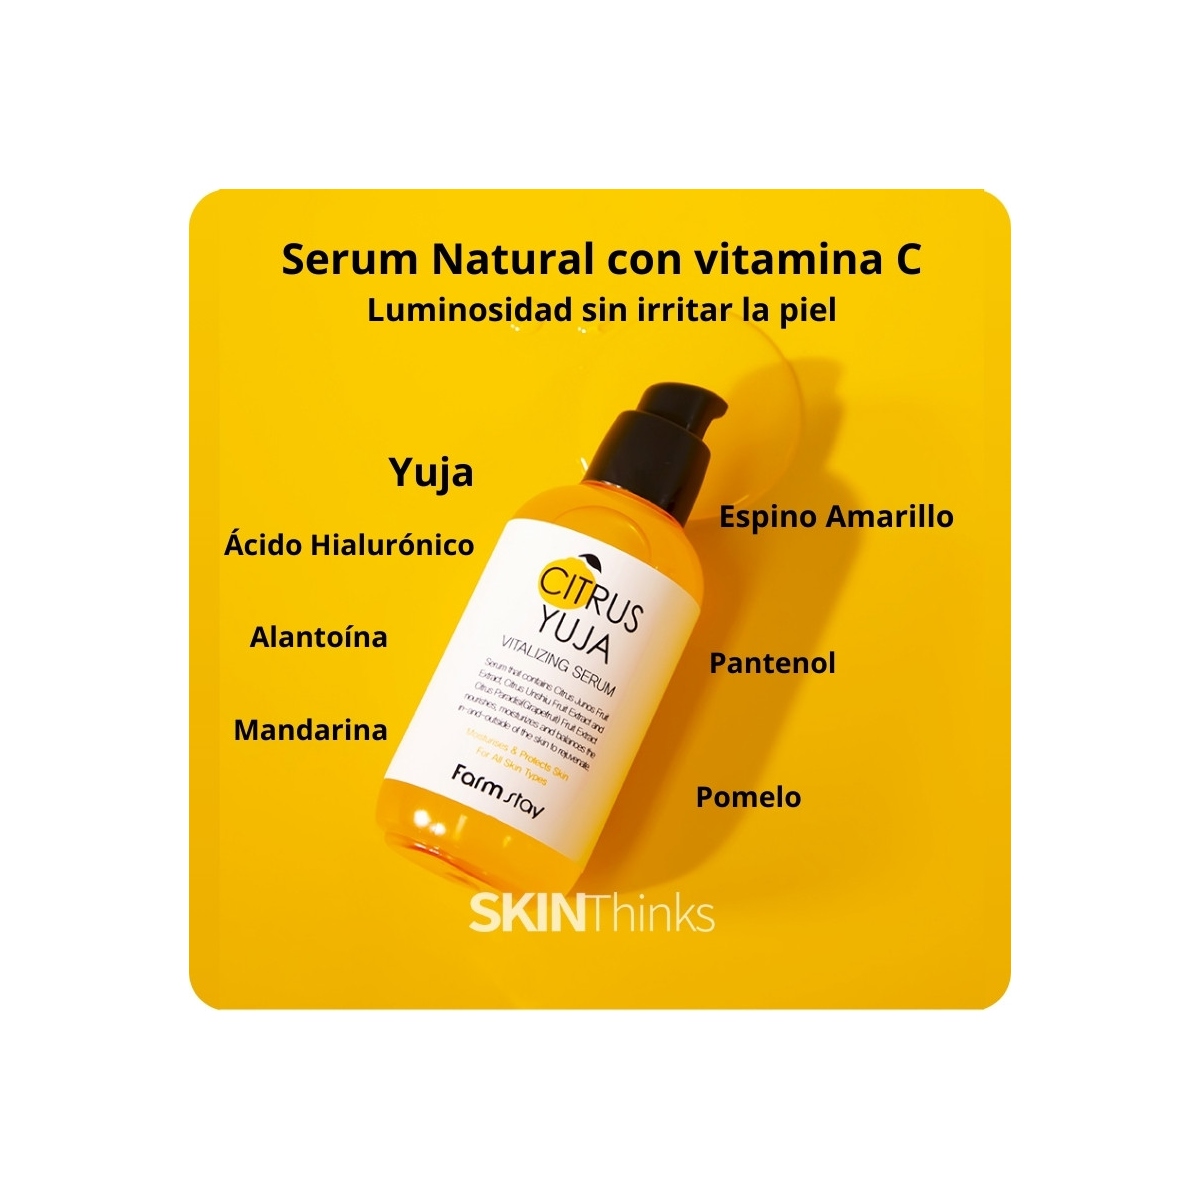 Serum y Ampoules al mejor precio: Serum con Vitamina C Farmstay Citrus Yuja Vitalizing Serum 100ml de FarmStay en Skin Thinks - Piel Grasa